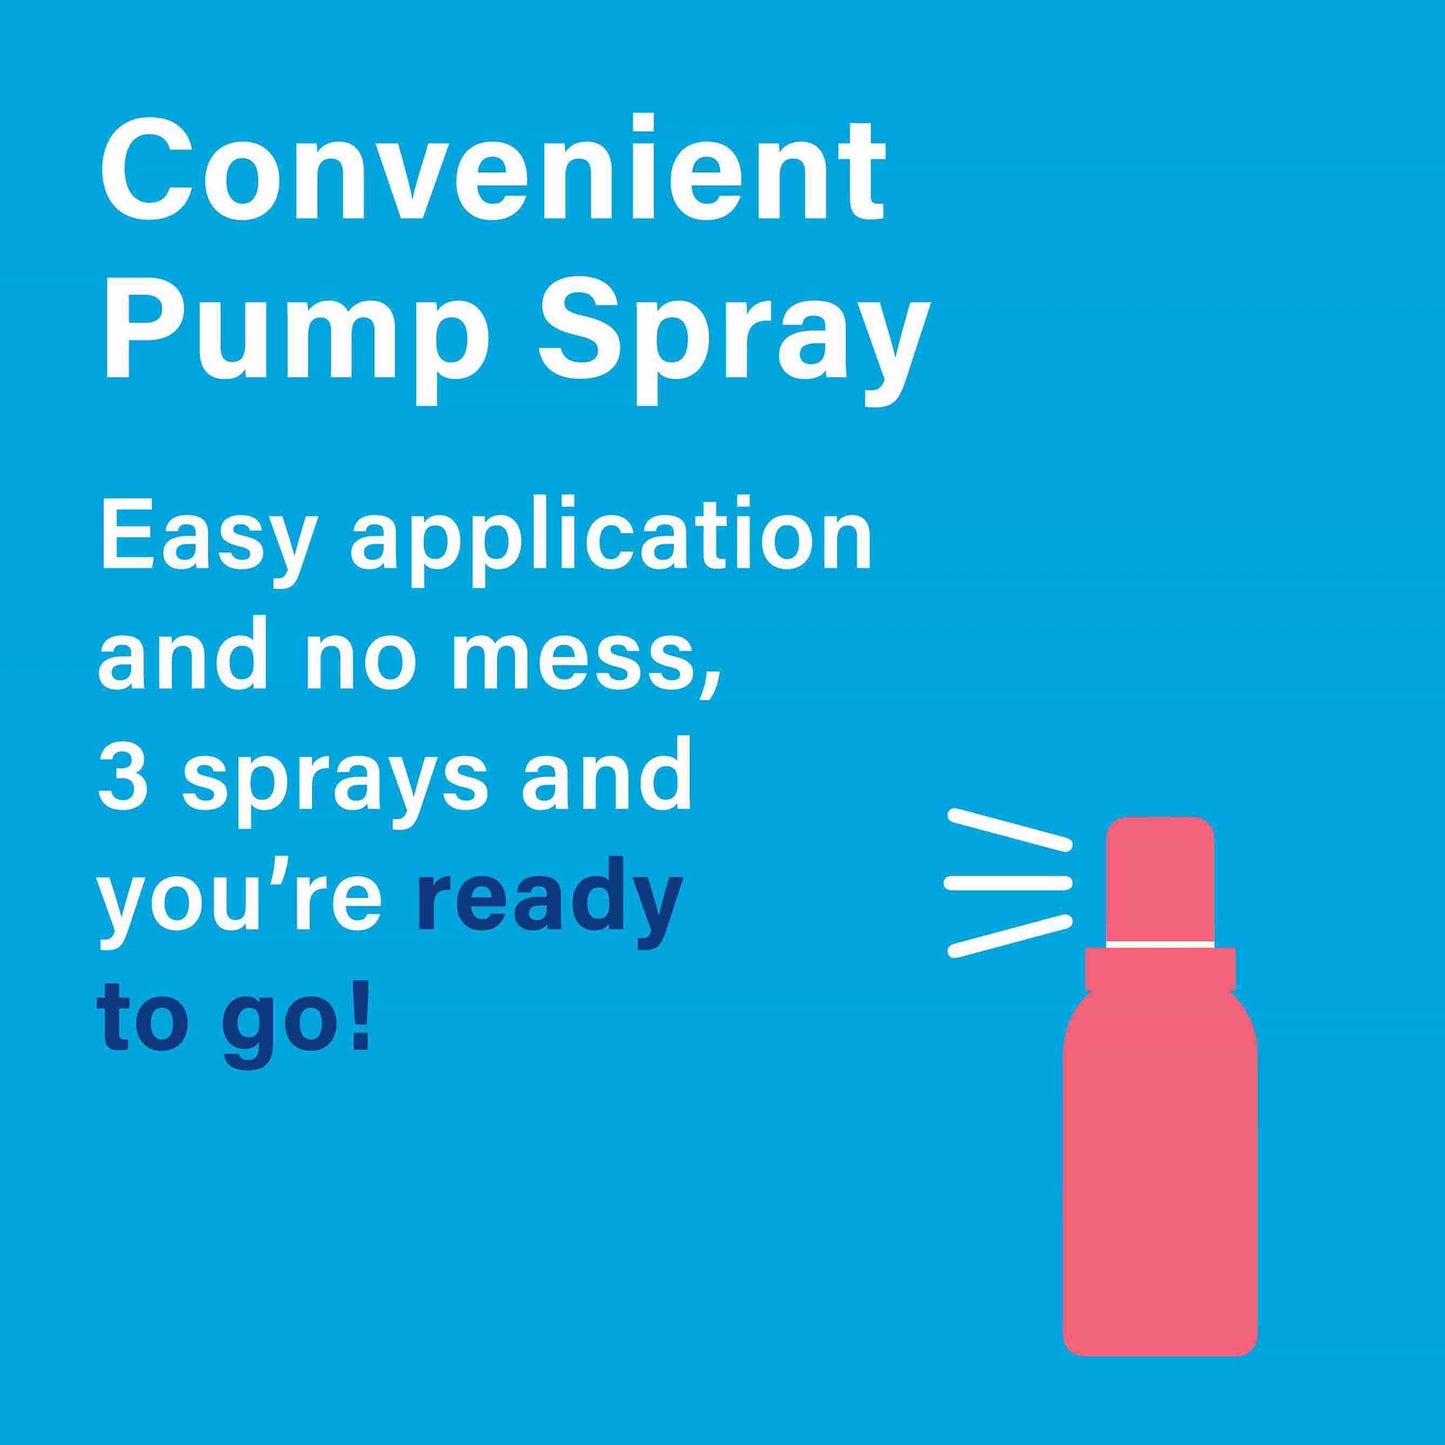 Convenient pump spray